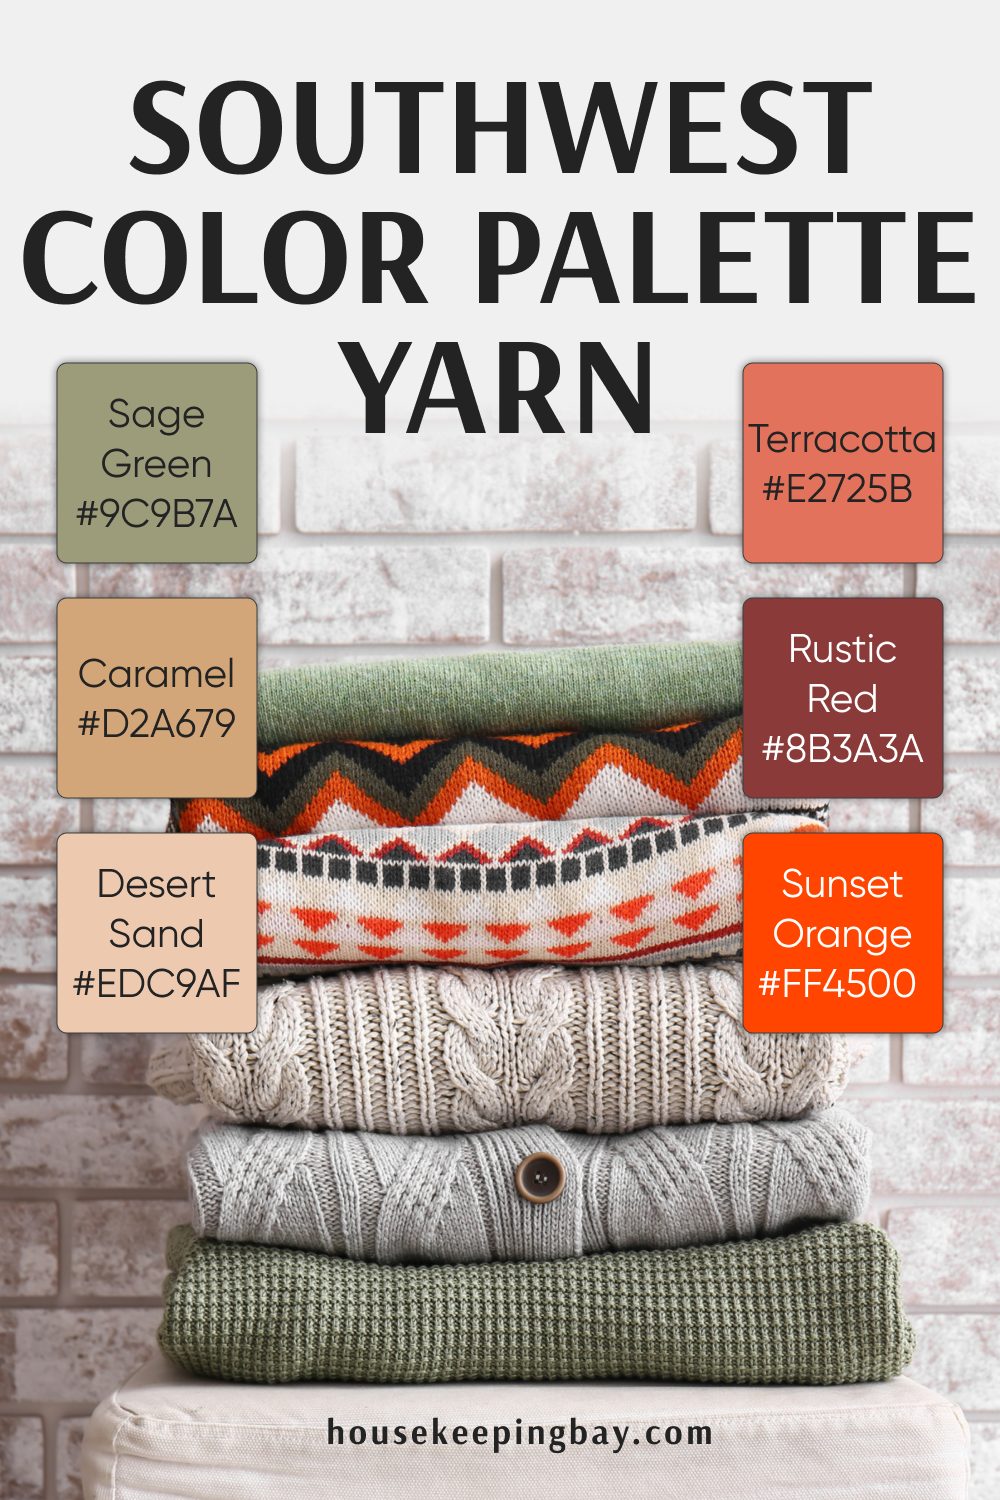 Southwest Color Palette Yarn